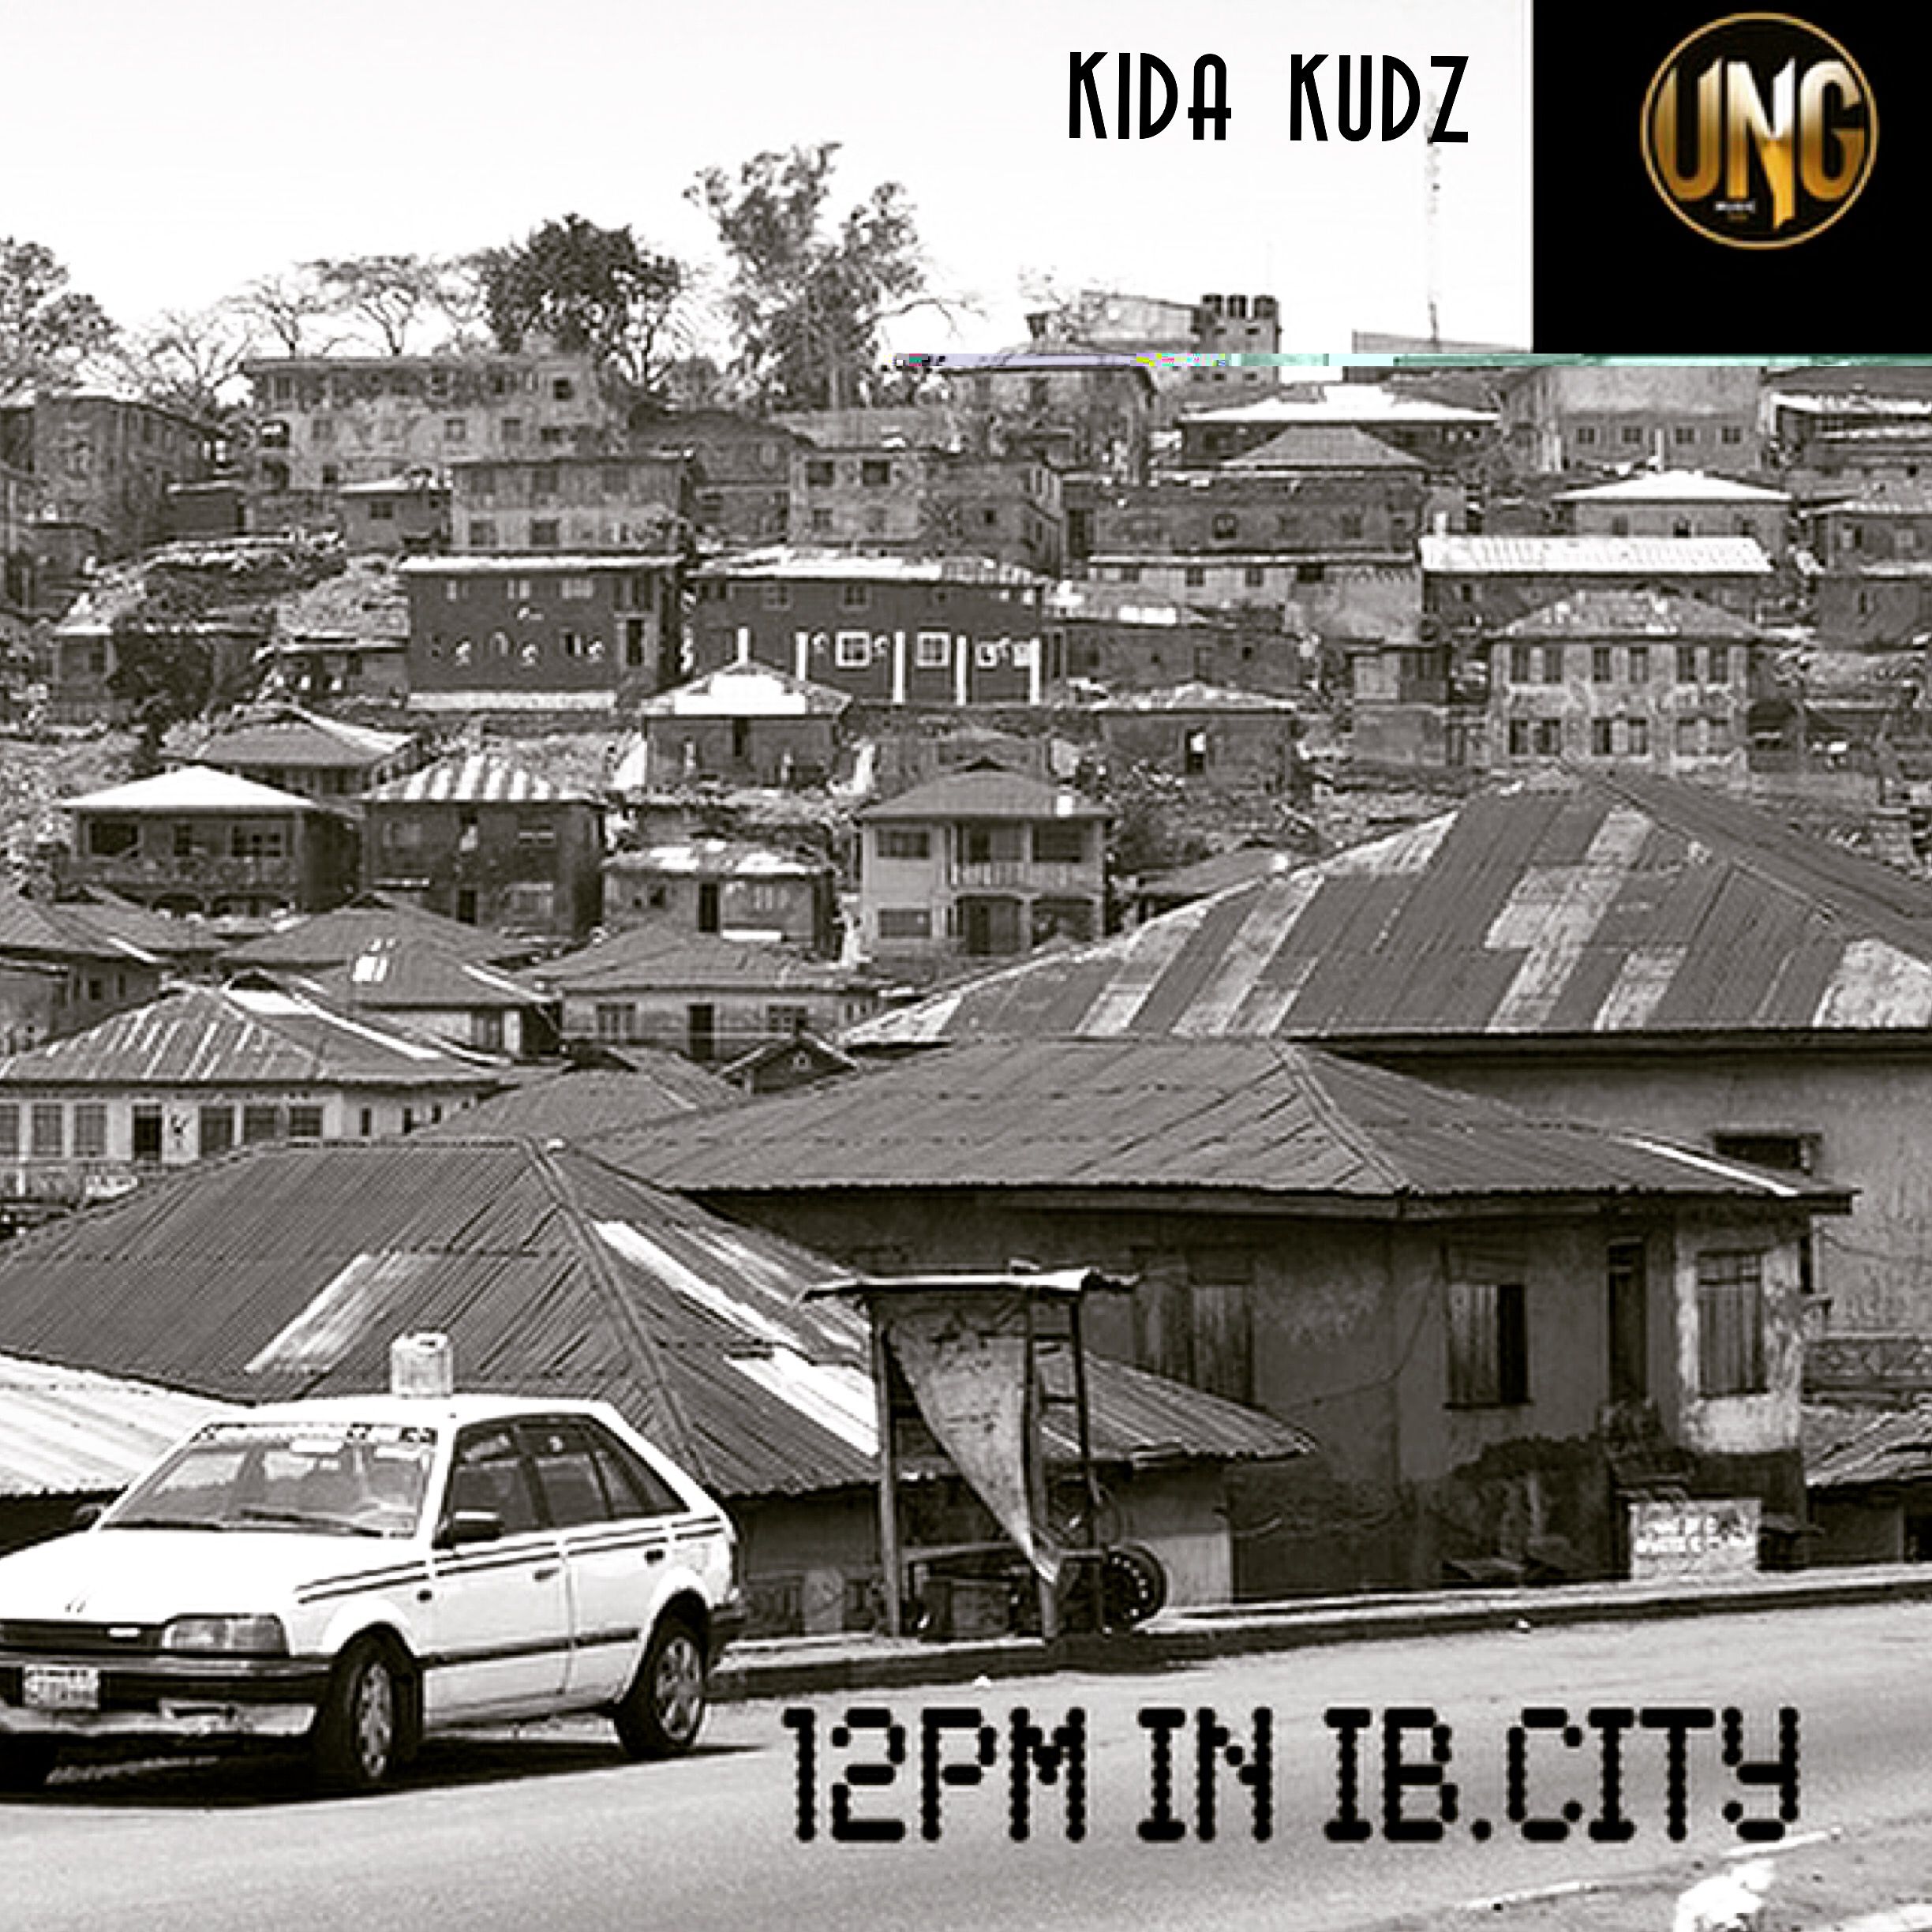 Kida Kudz - 12PM IN IB CITY (Freestyle) Artwork | AceWorldTeam.com